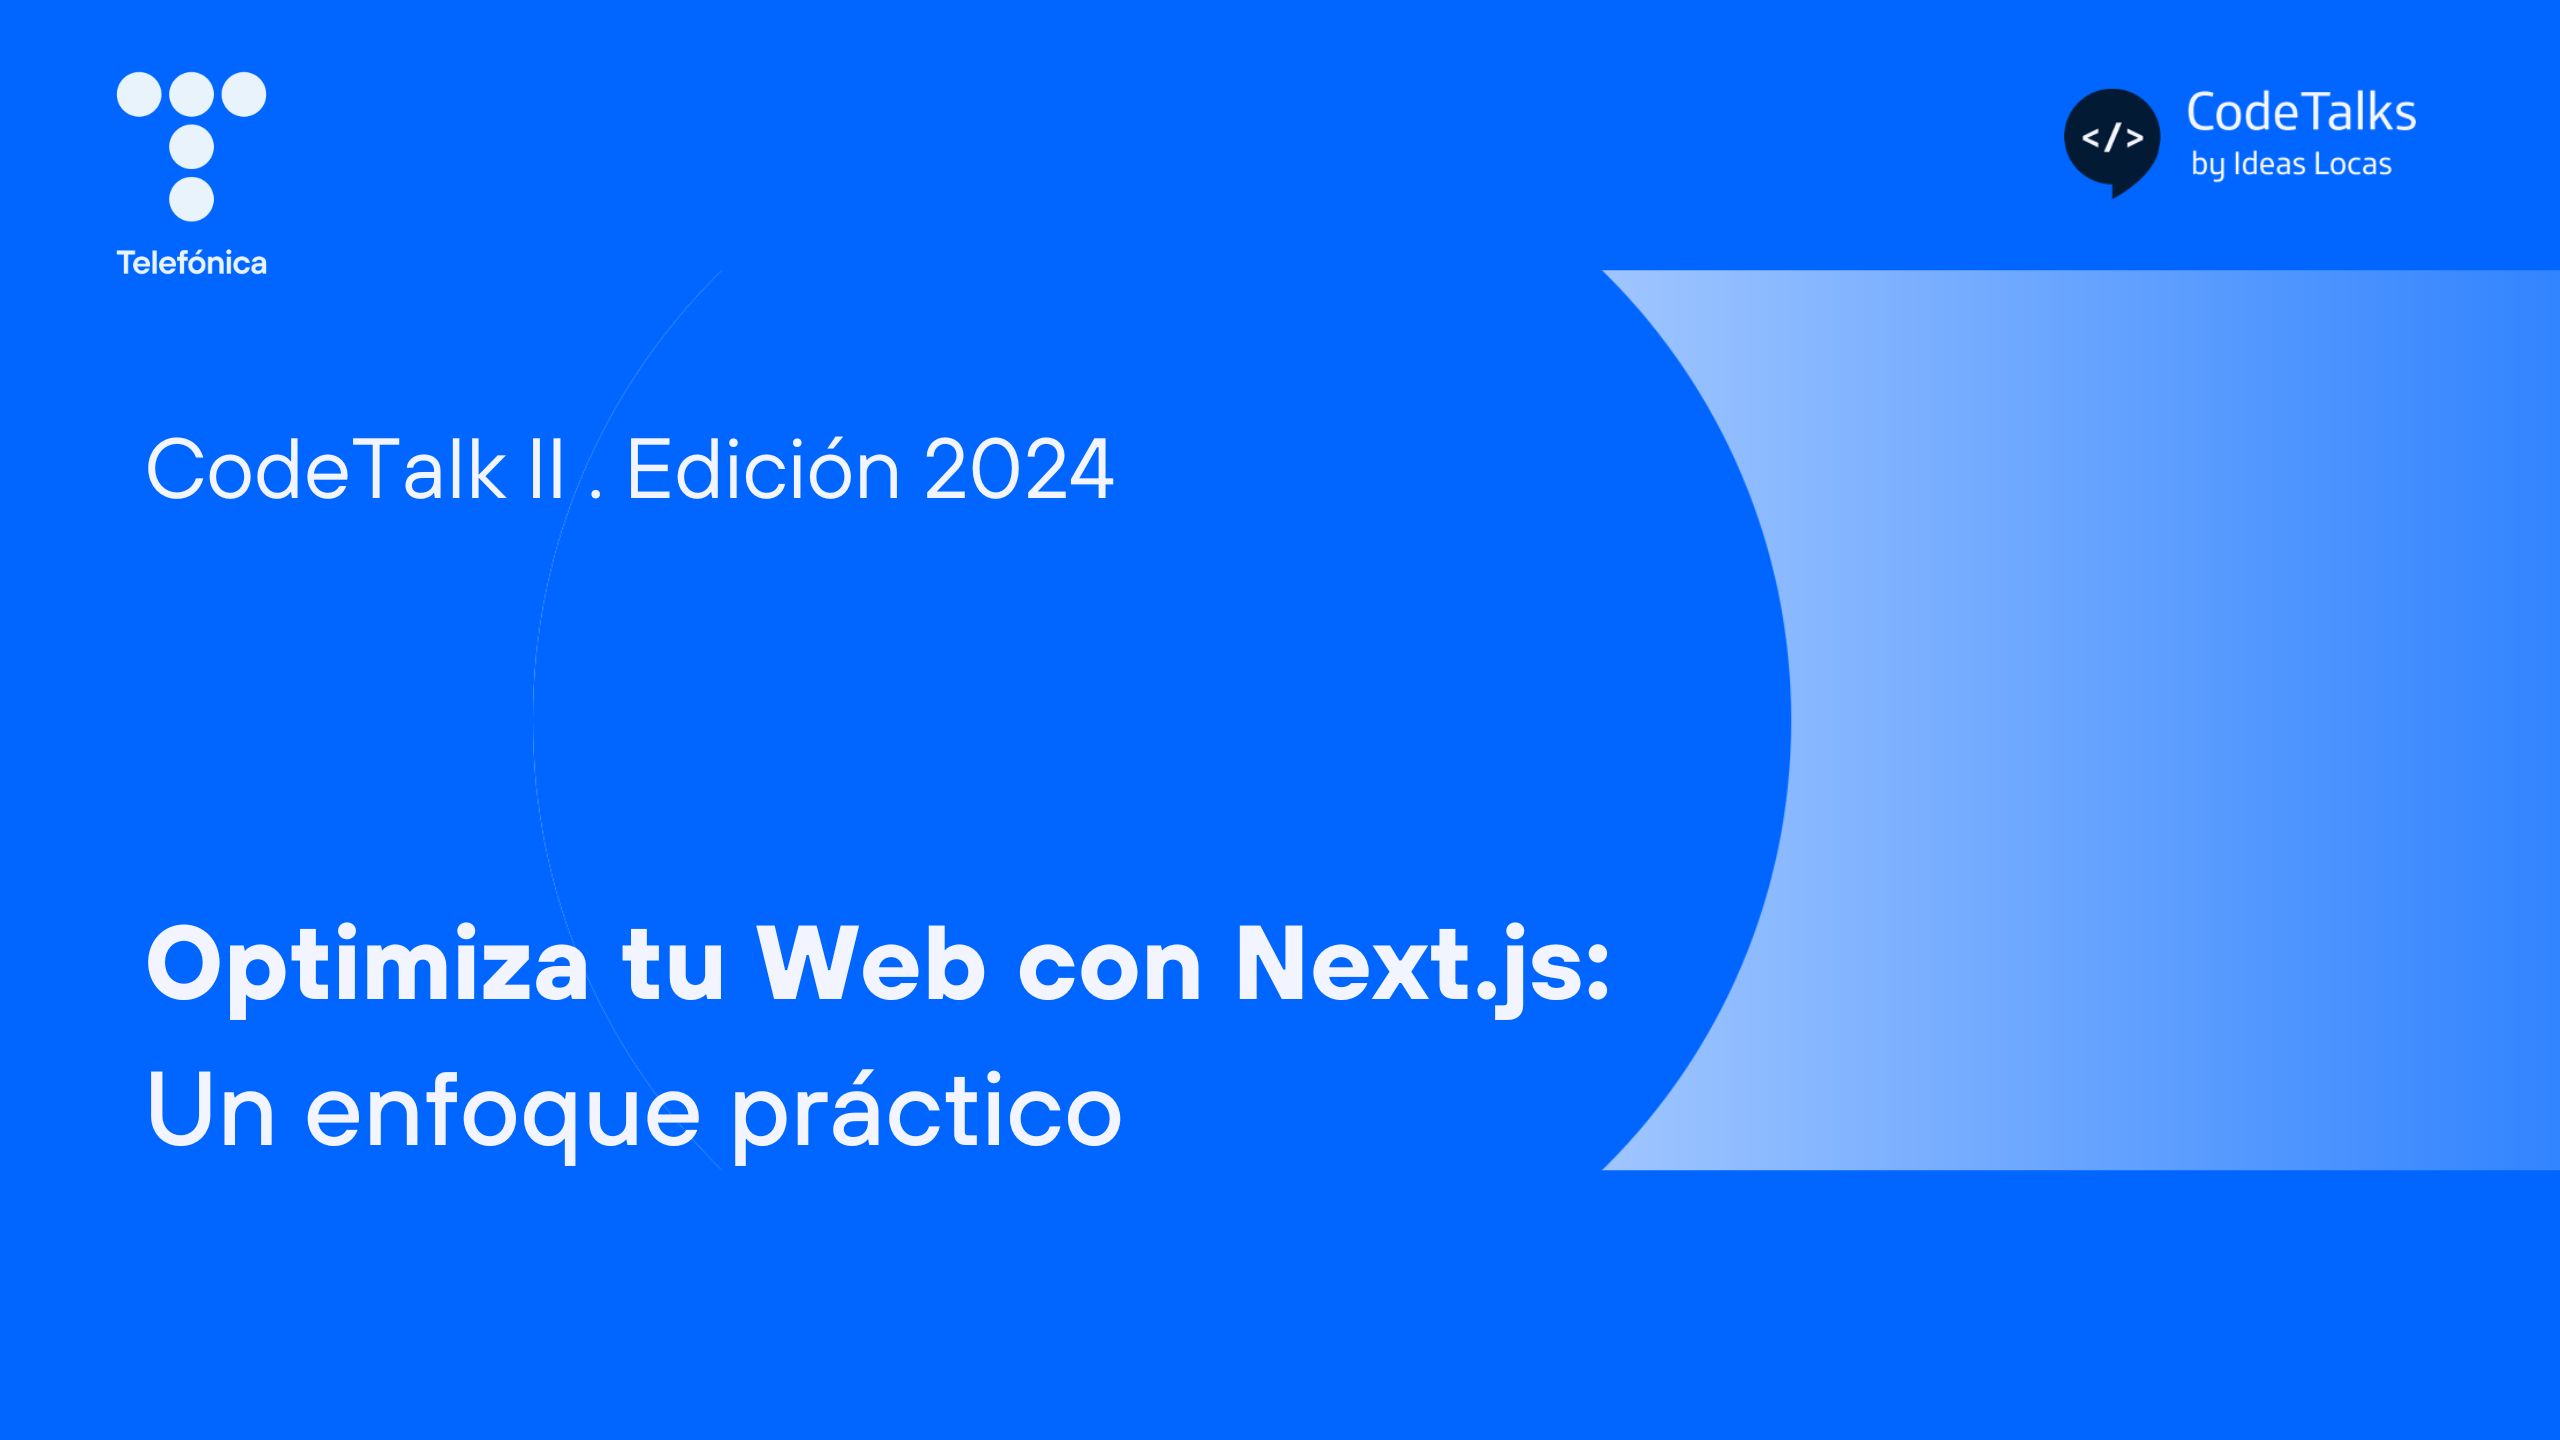 Optimiza tu Web con Next.js